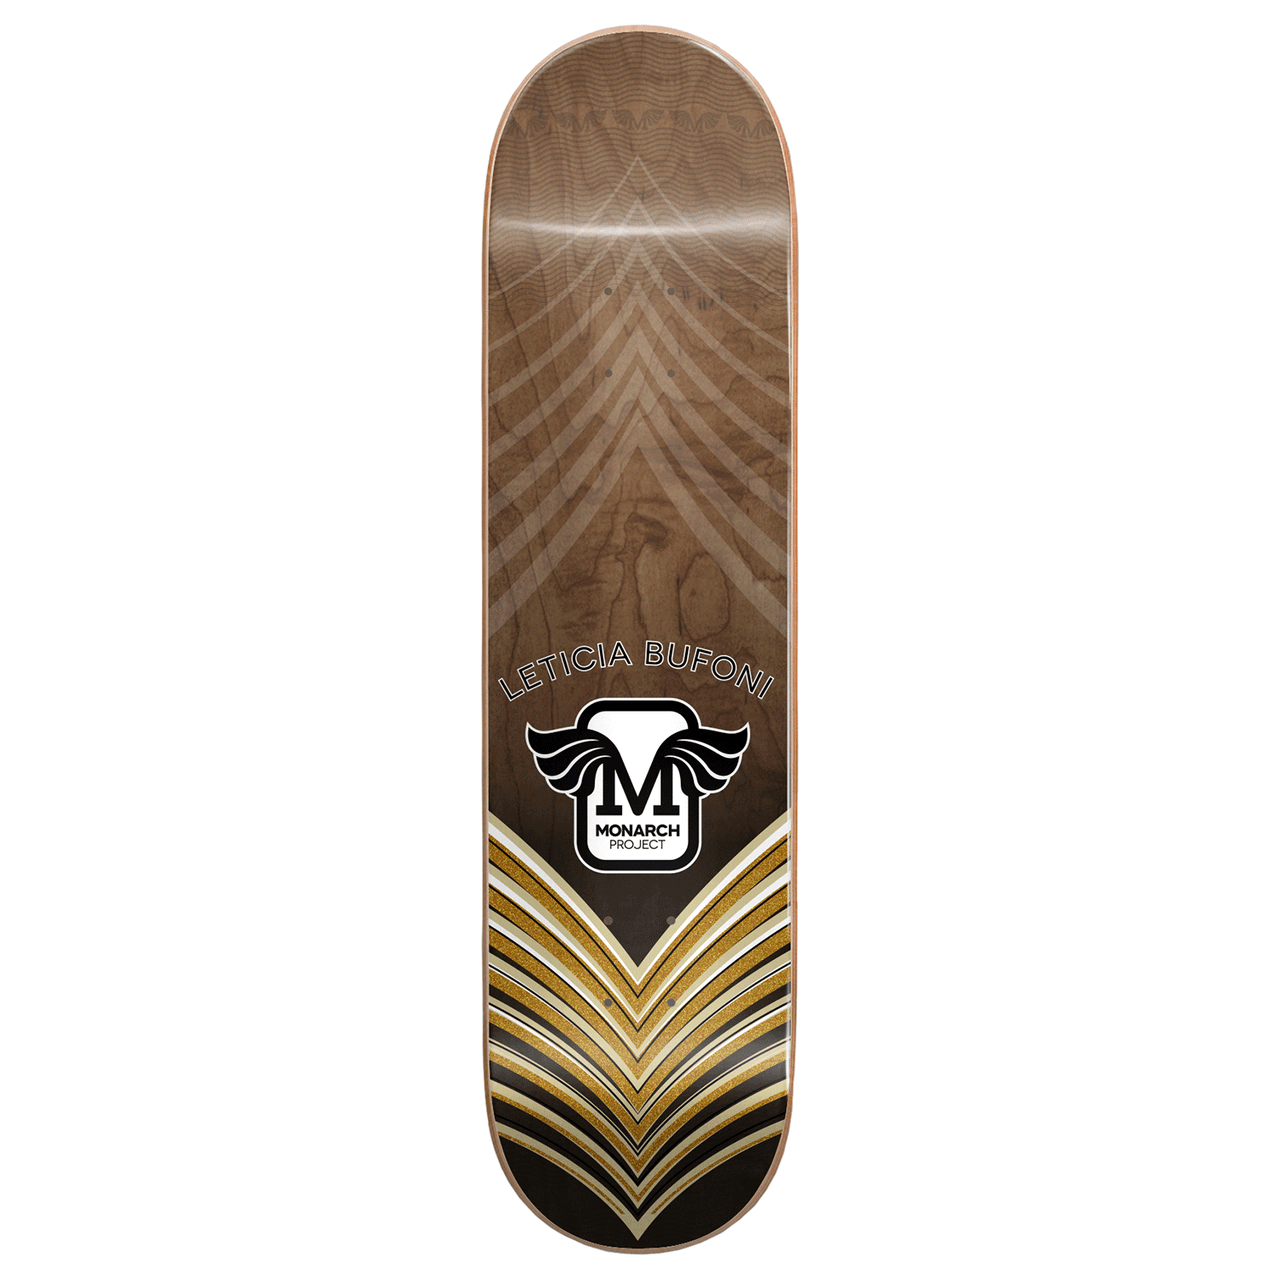 Monarch Project Skateboard Deck Leticia Bufoni Horus Gradient Brown 8.5